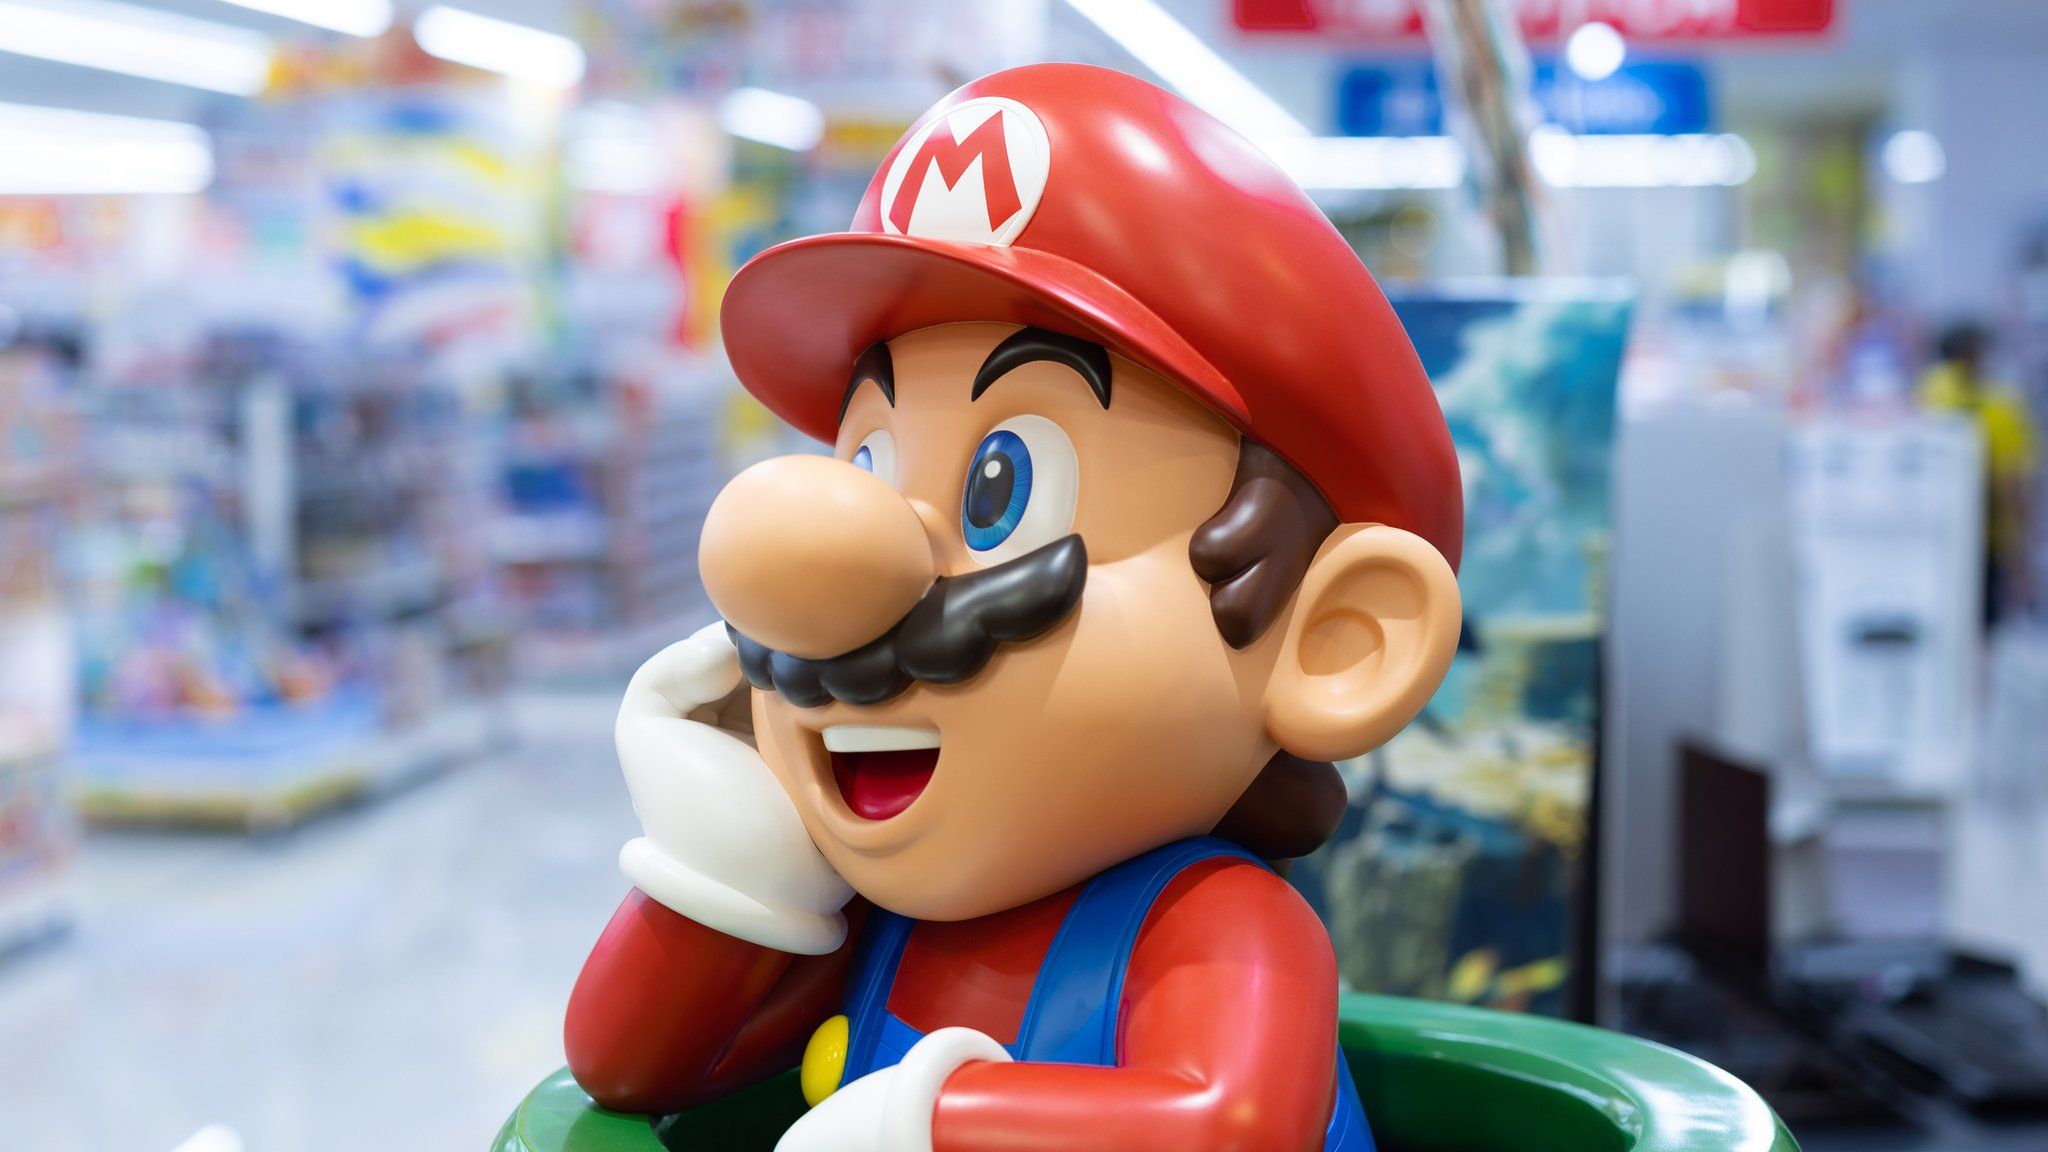 Super Mario Bros Wonder game a 'notebook of chaos', critics say